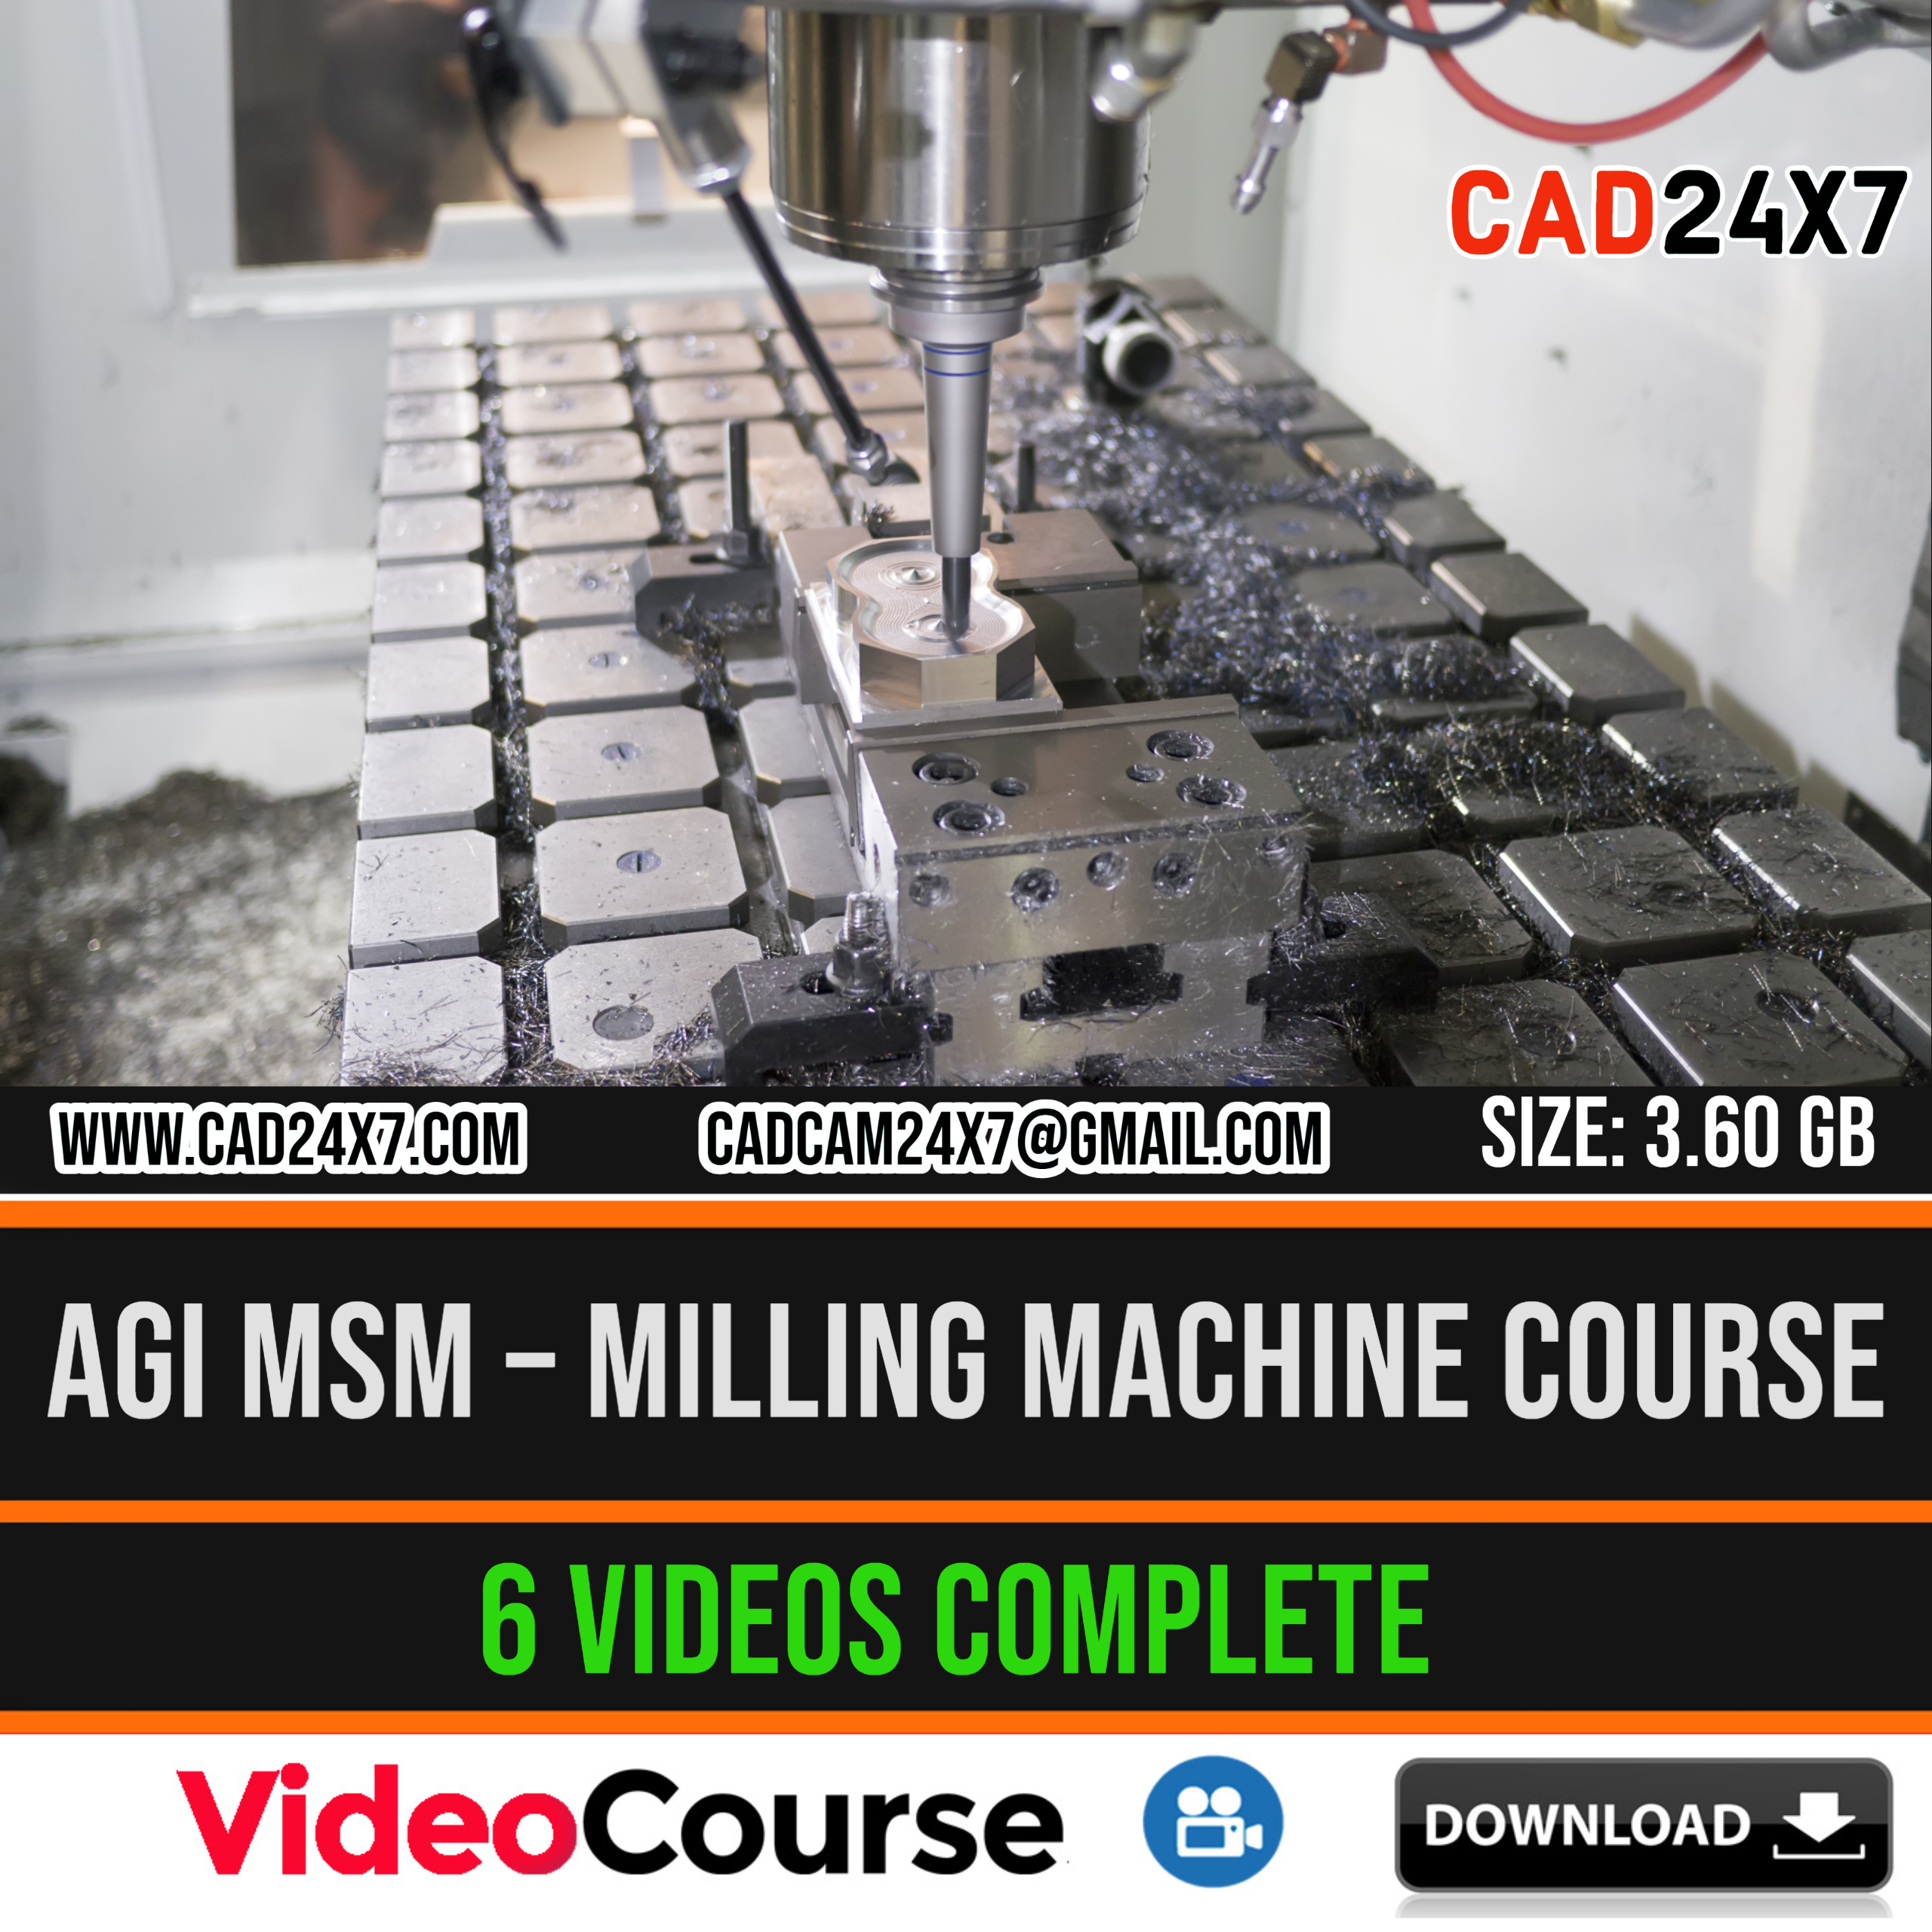 AGI MSM Milling Machine Course 6 Videos Complete